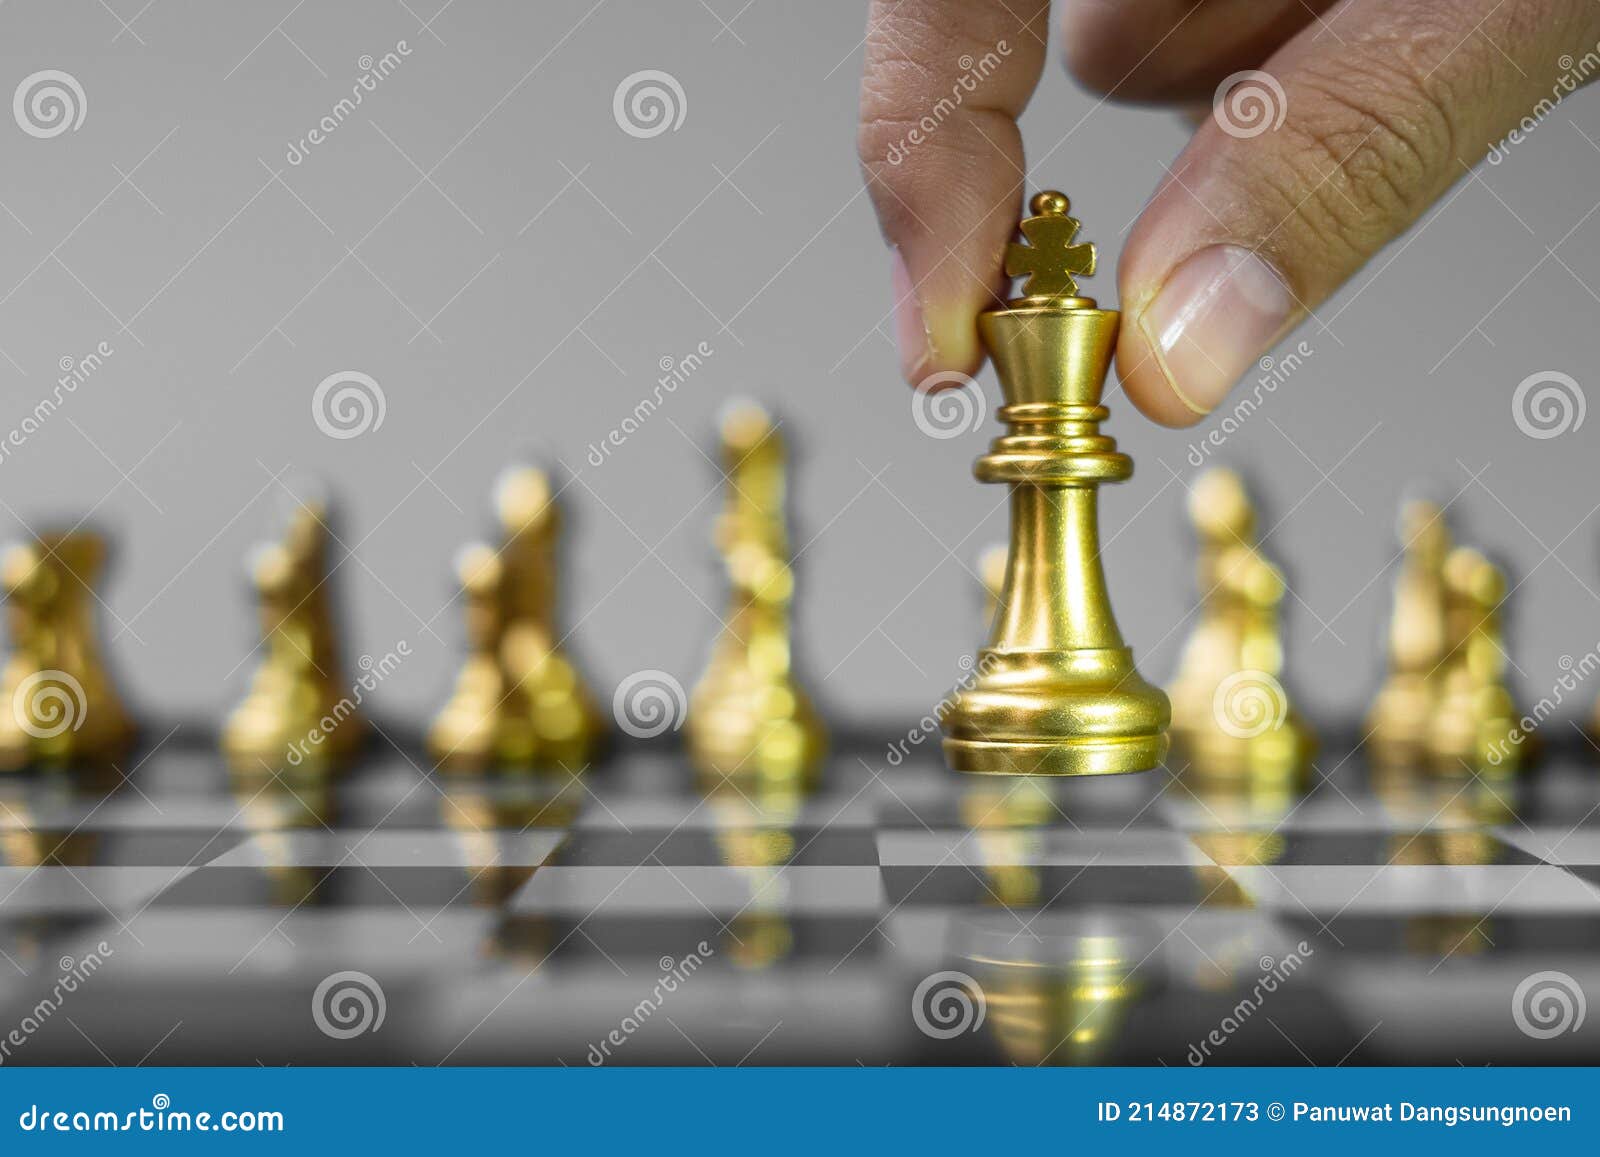 Figura do rei do xadrez de ouro destaque-se da multidão no fundo do  tabuleiro de xadrez.